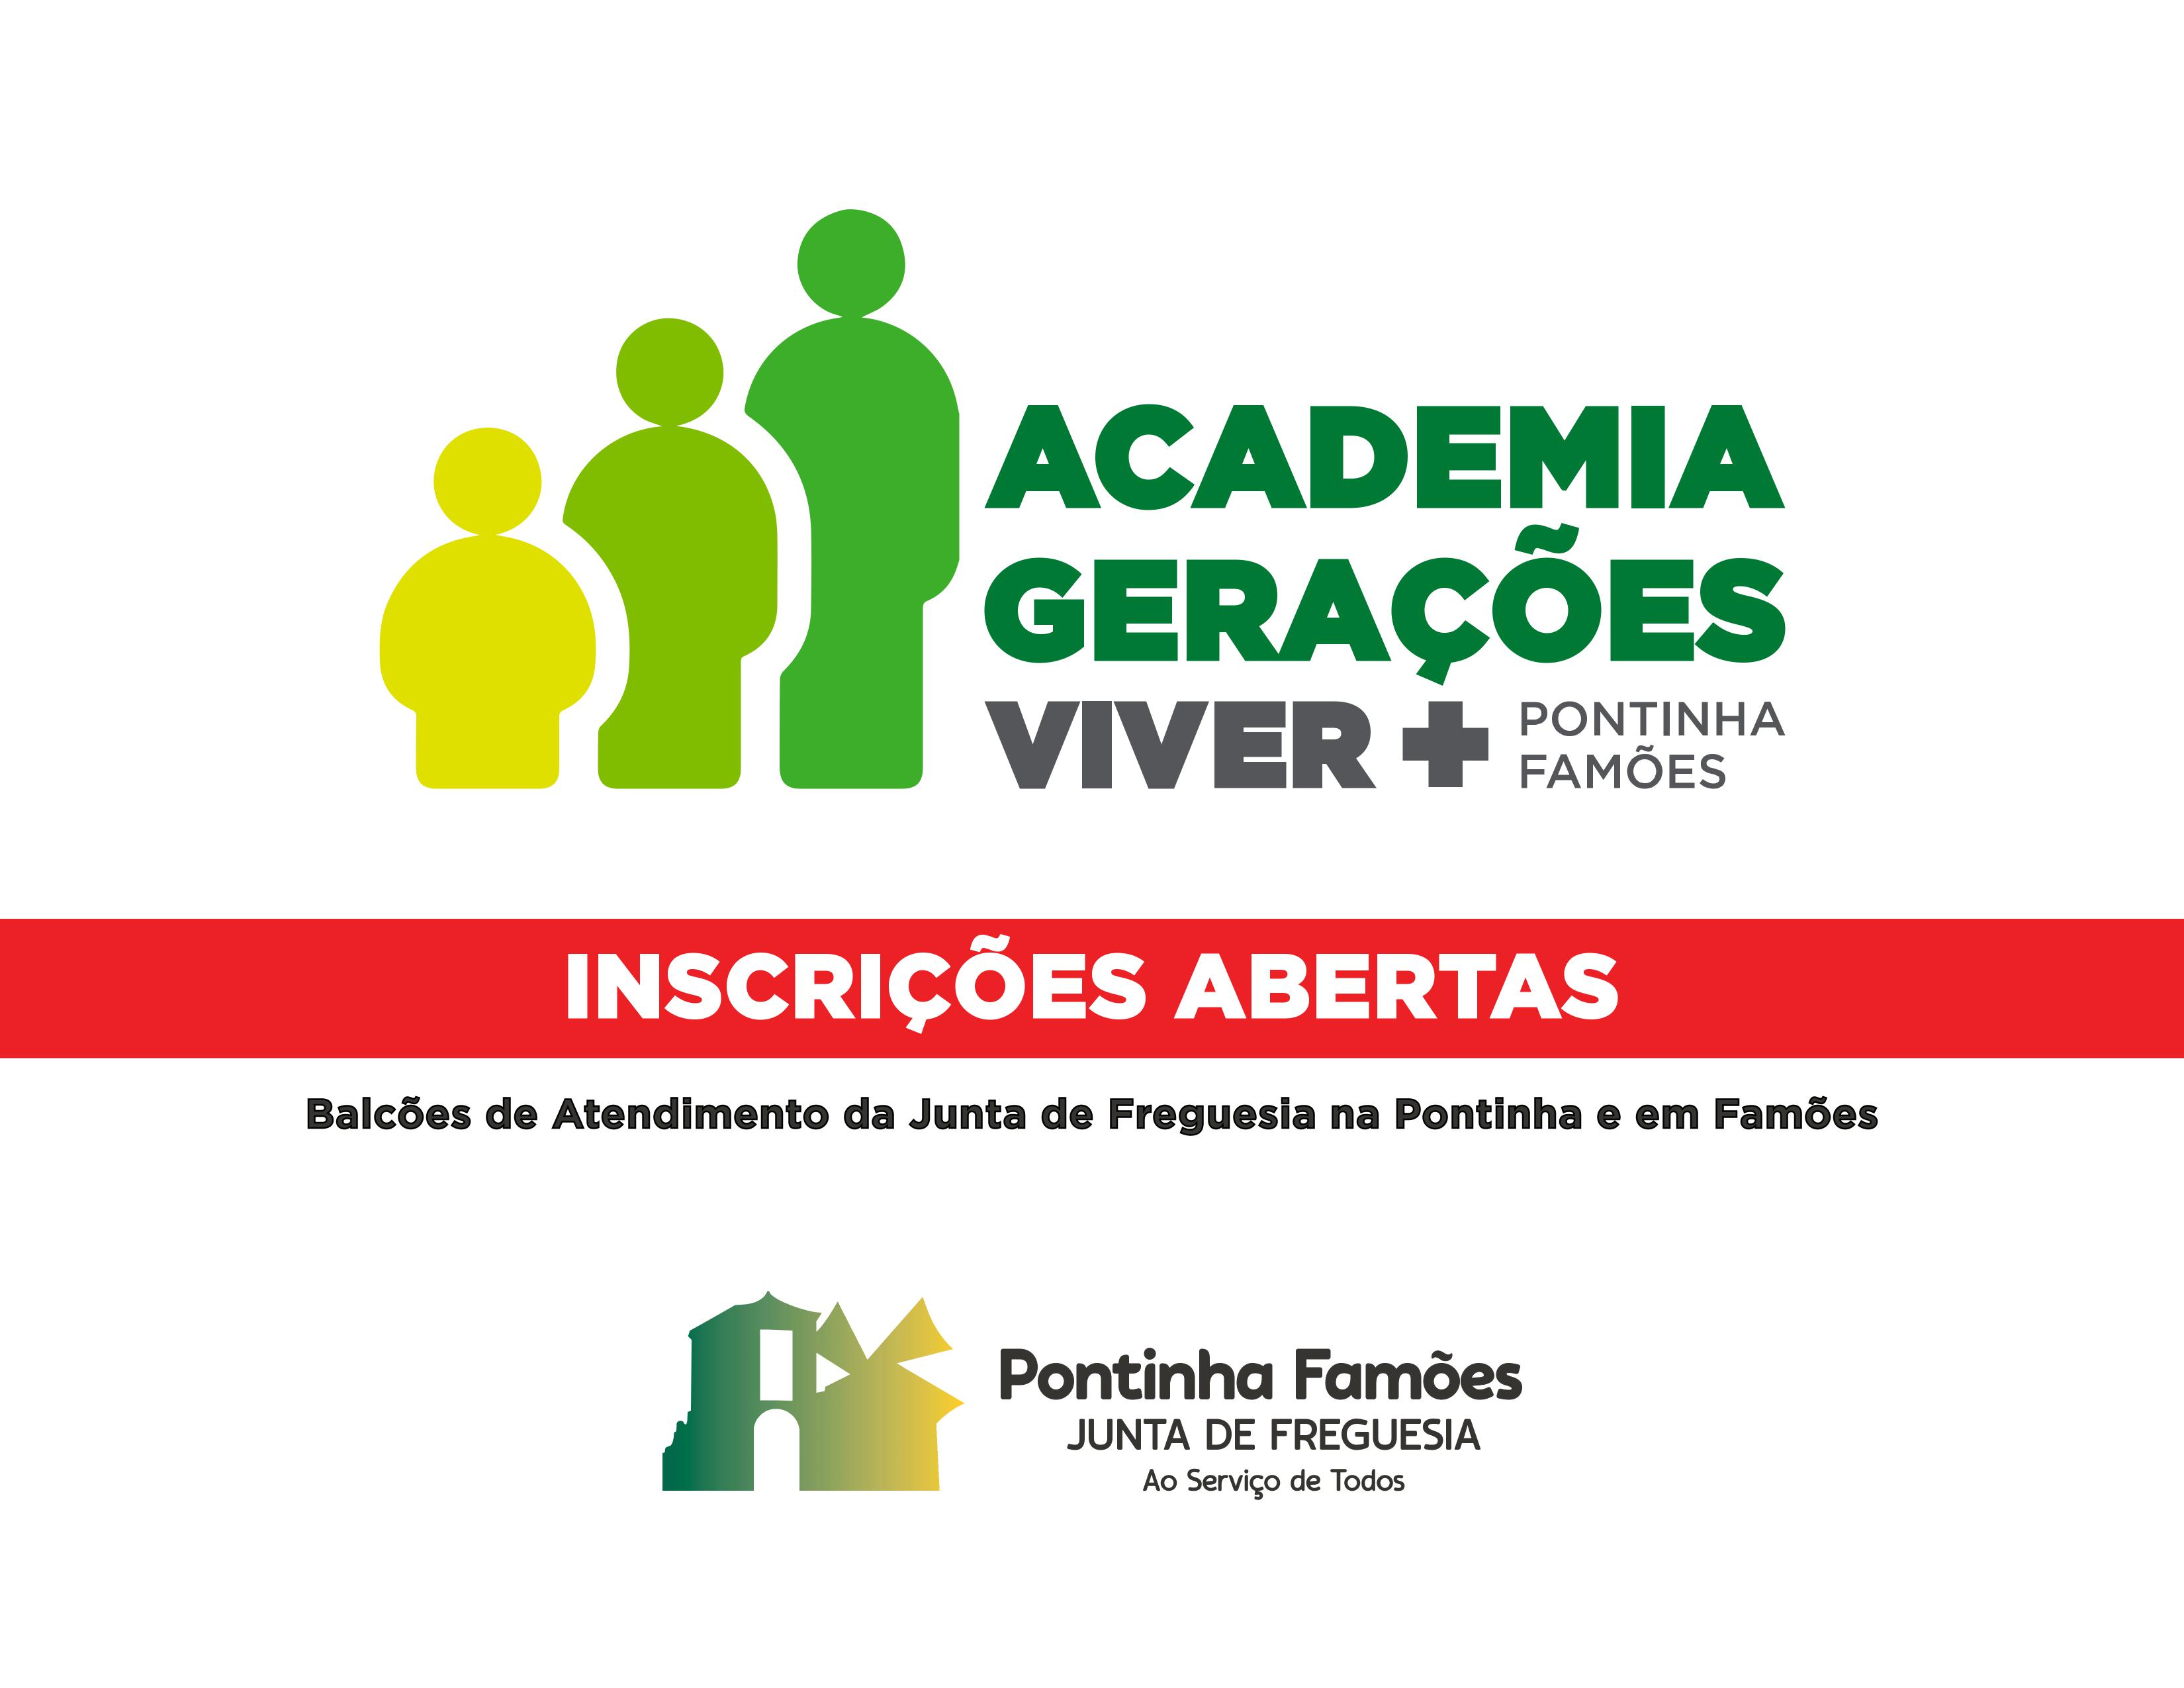 https://bo.jf-pontinhafamoes.pt/FileUploads/noticias/academia-geracoes-inscricoes.jpg